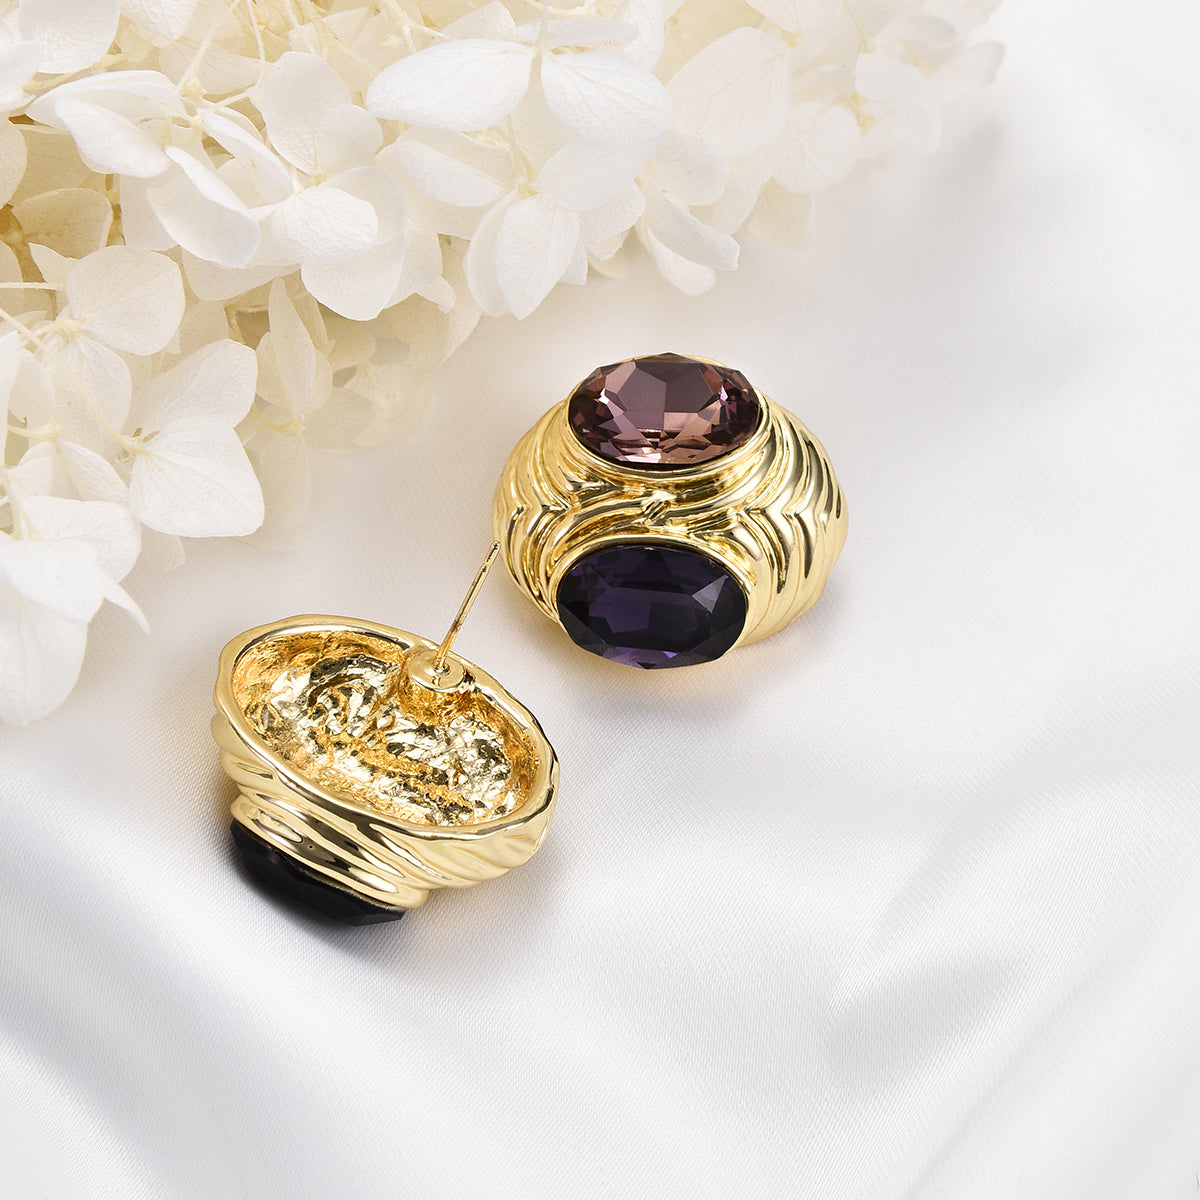 Sumptuous purple soul golden earrings